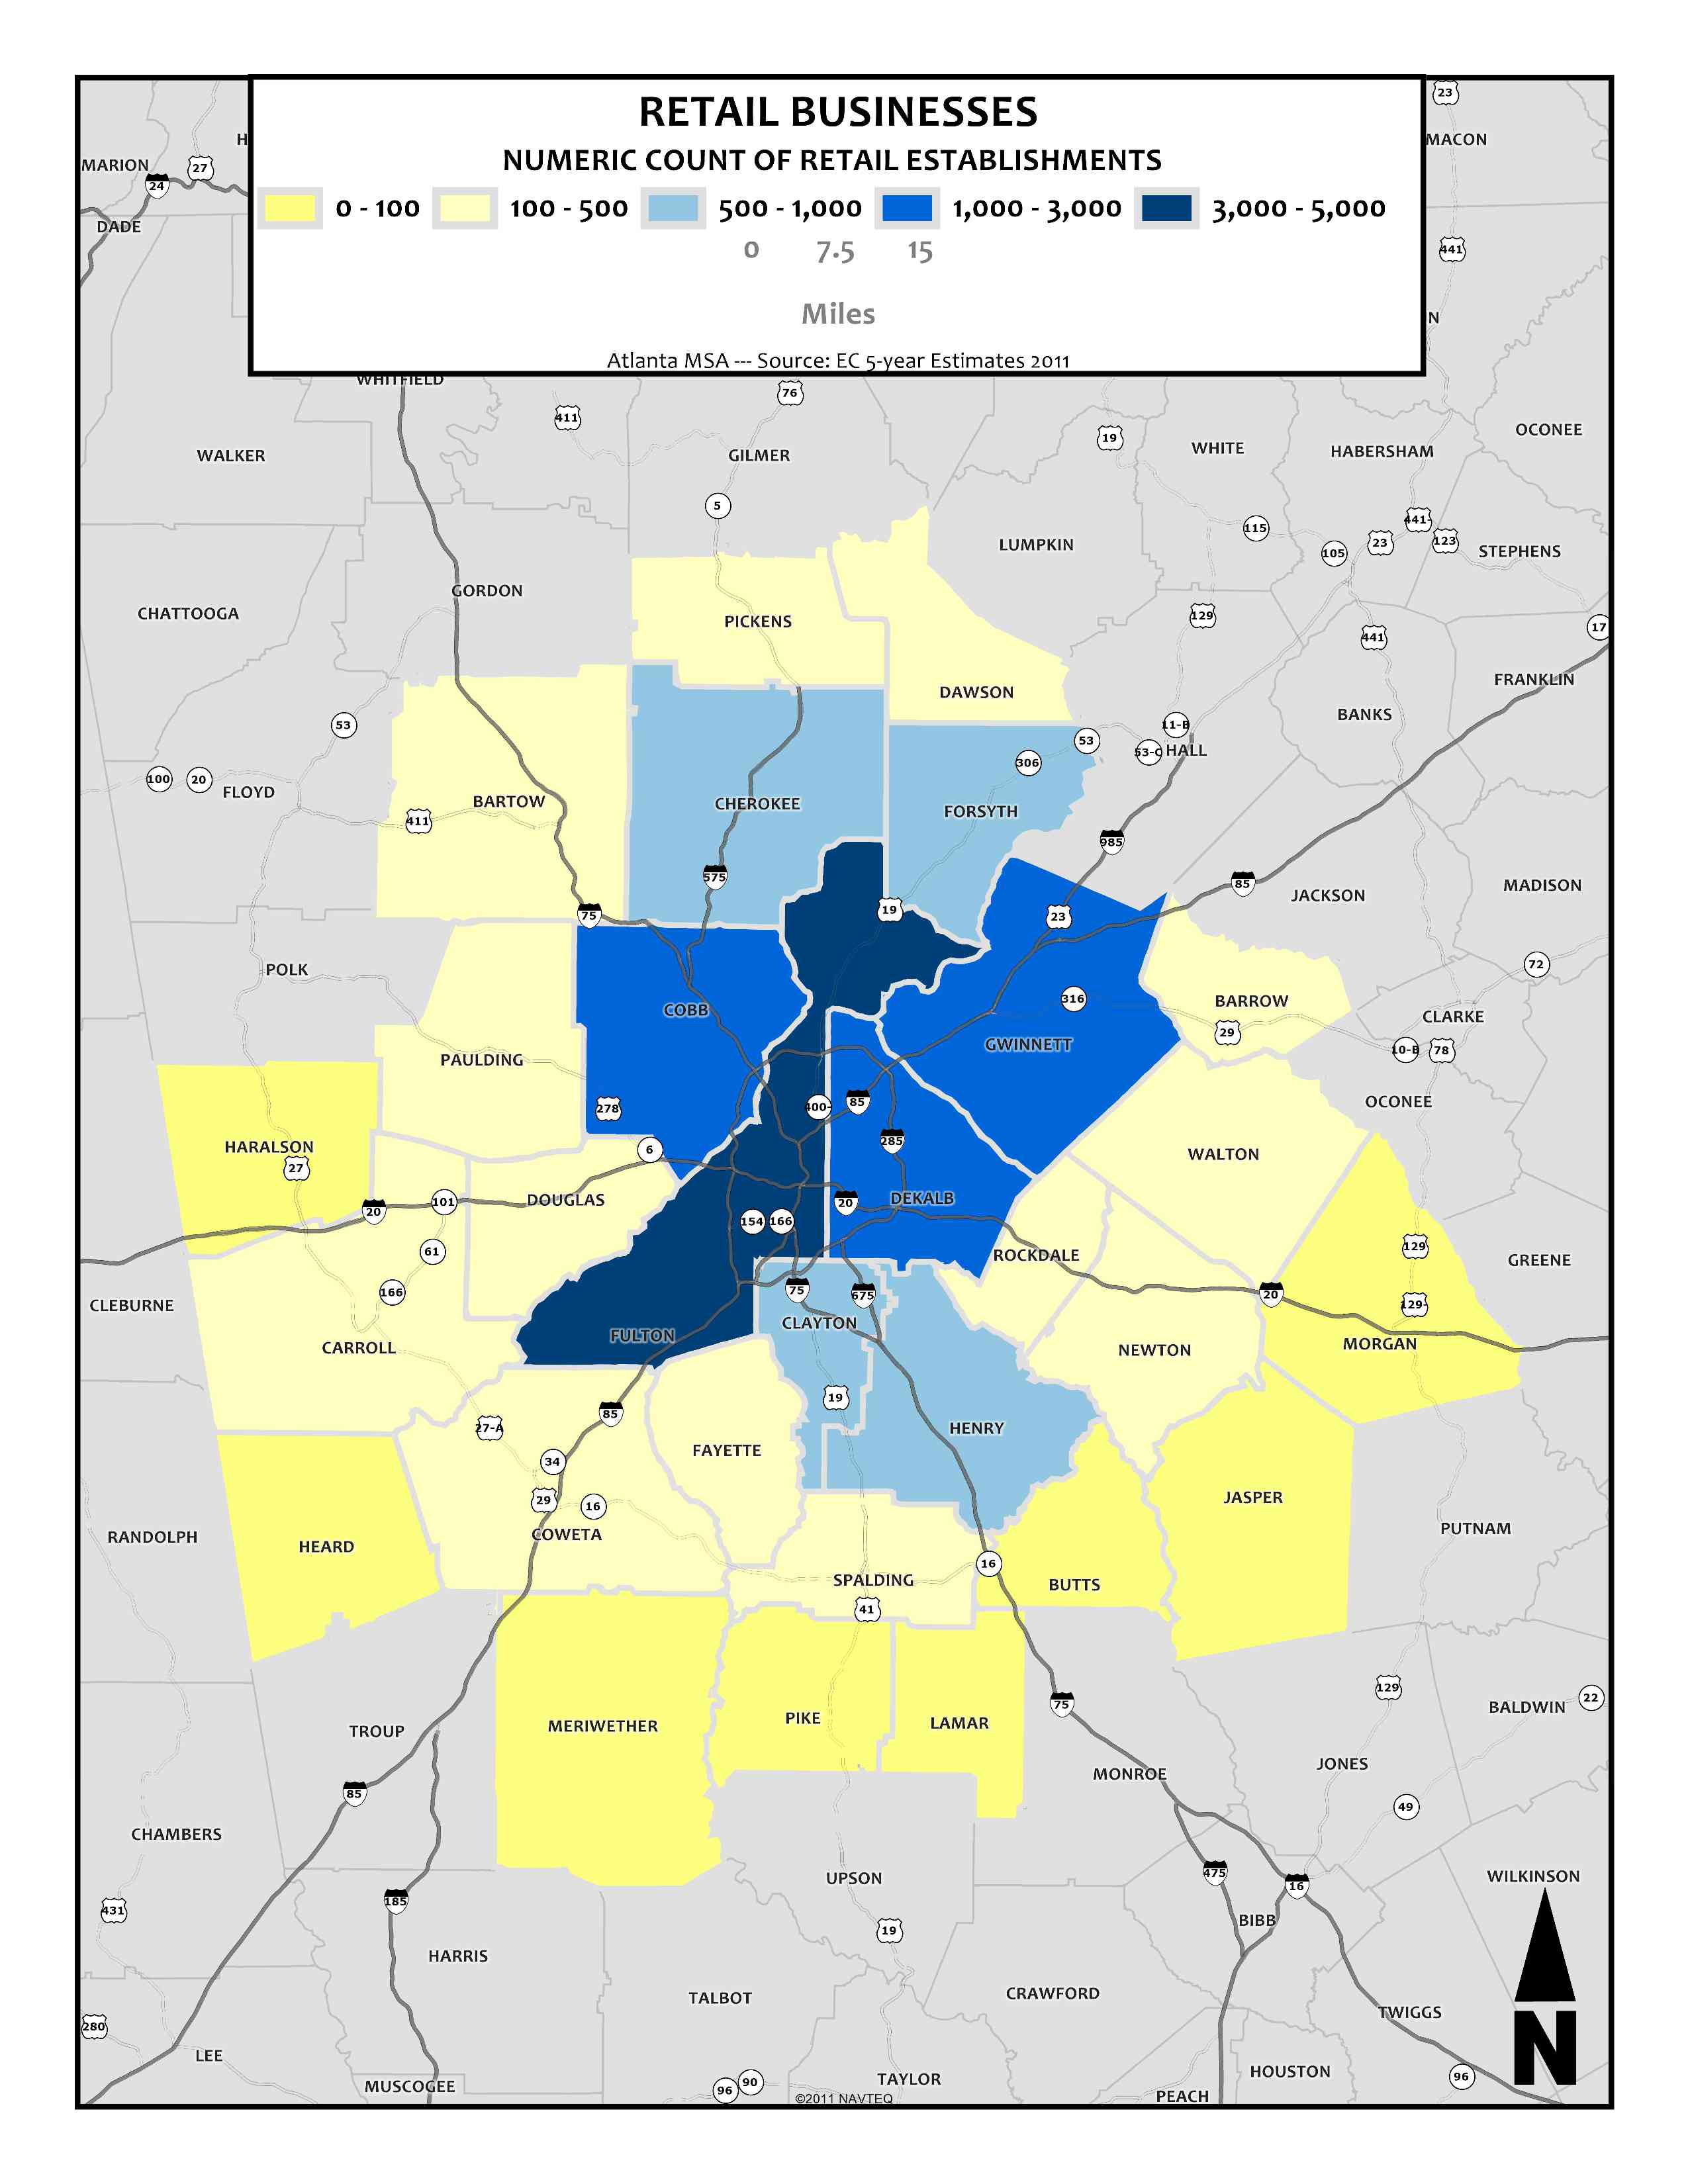 Retail Businesses Numeric Count, 2011 – metro counties